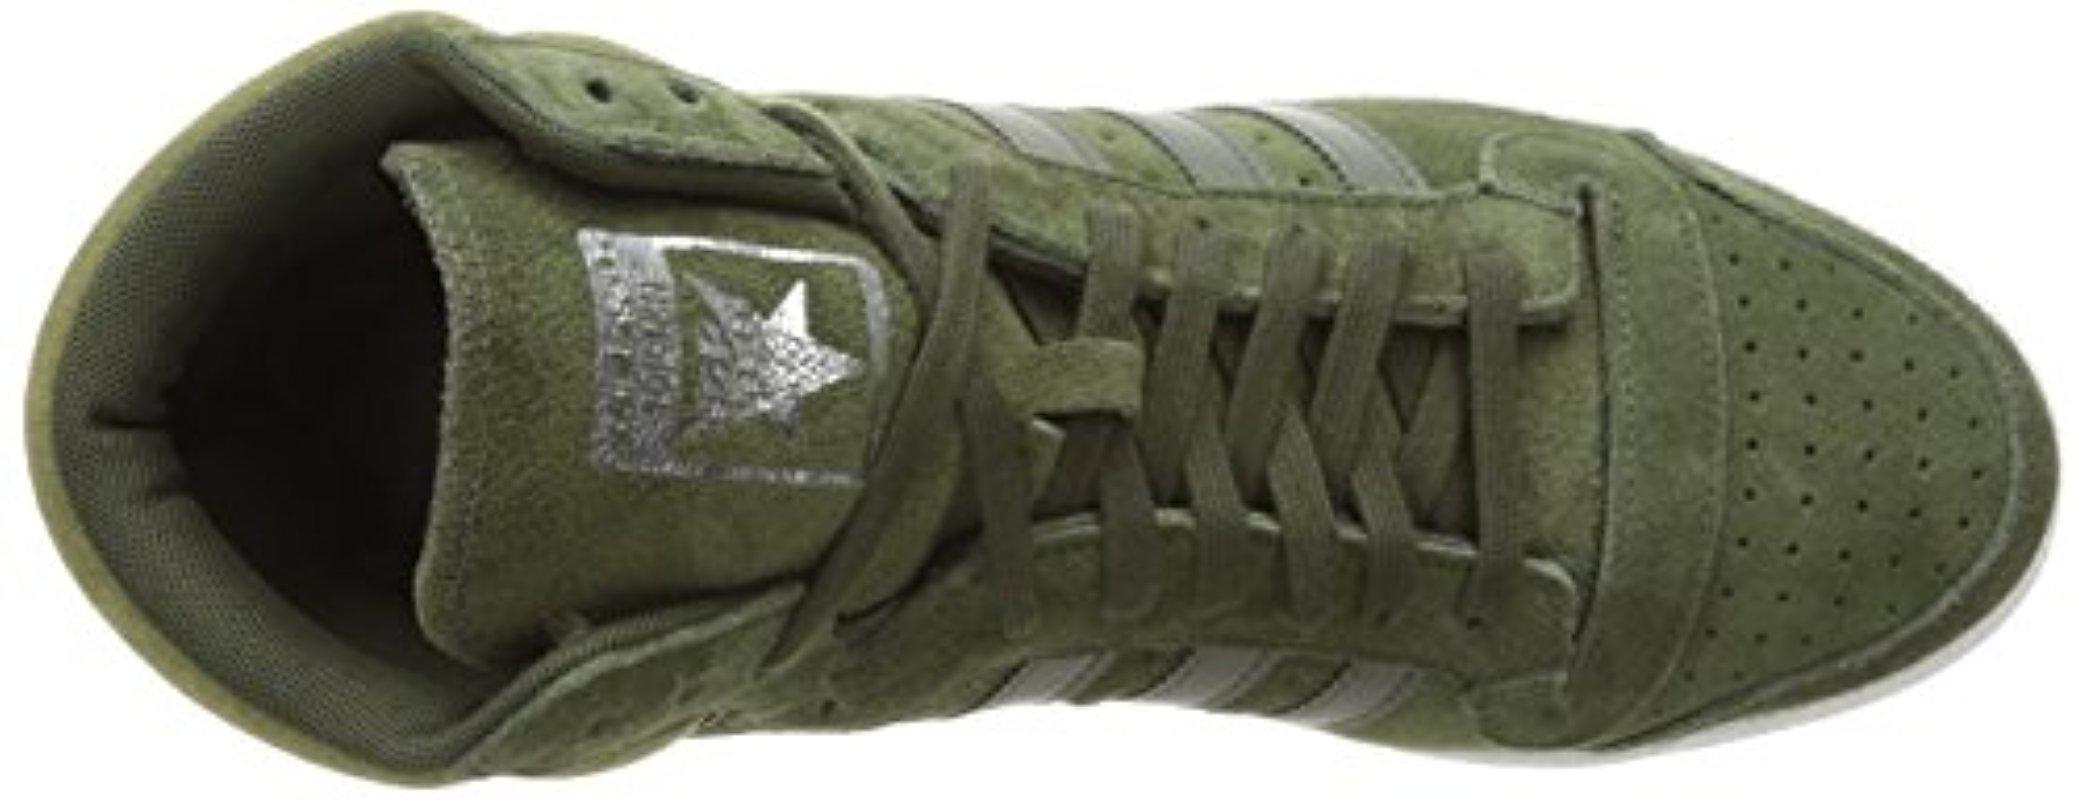 adidas Originals Suede Adidas Top Ten Hi Fashion Sneaker in Night Cargo  Night Cargo Olive ca (Green) for Men - Lyst